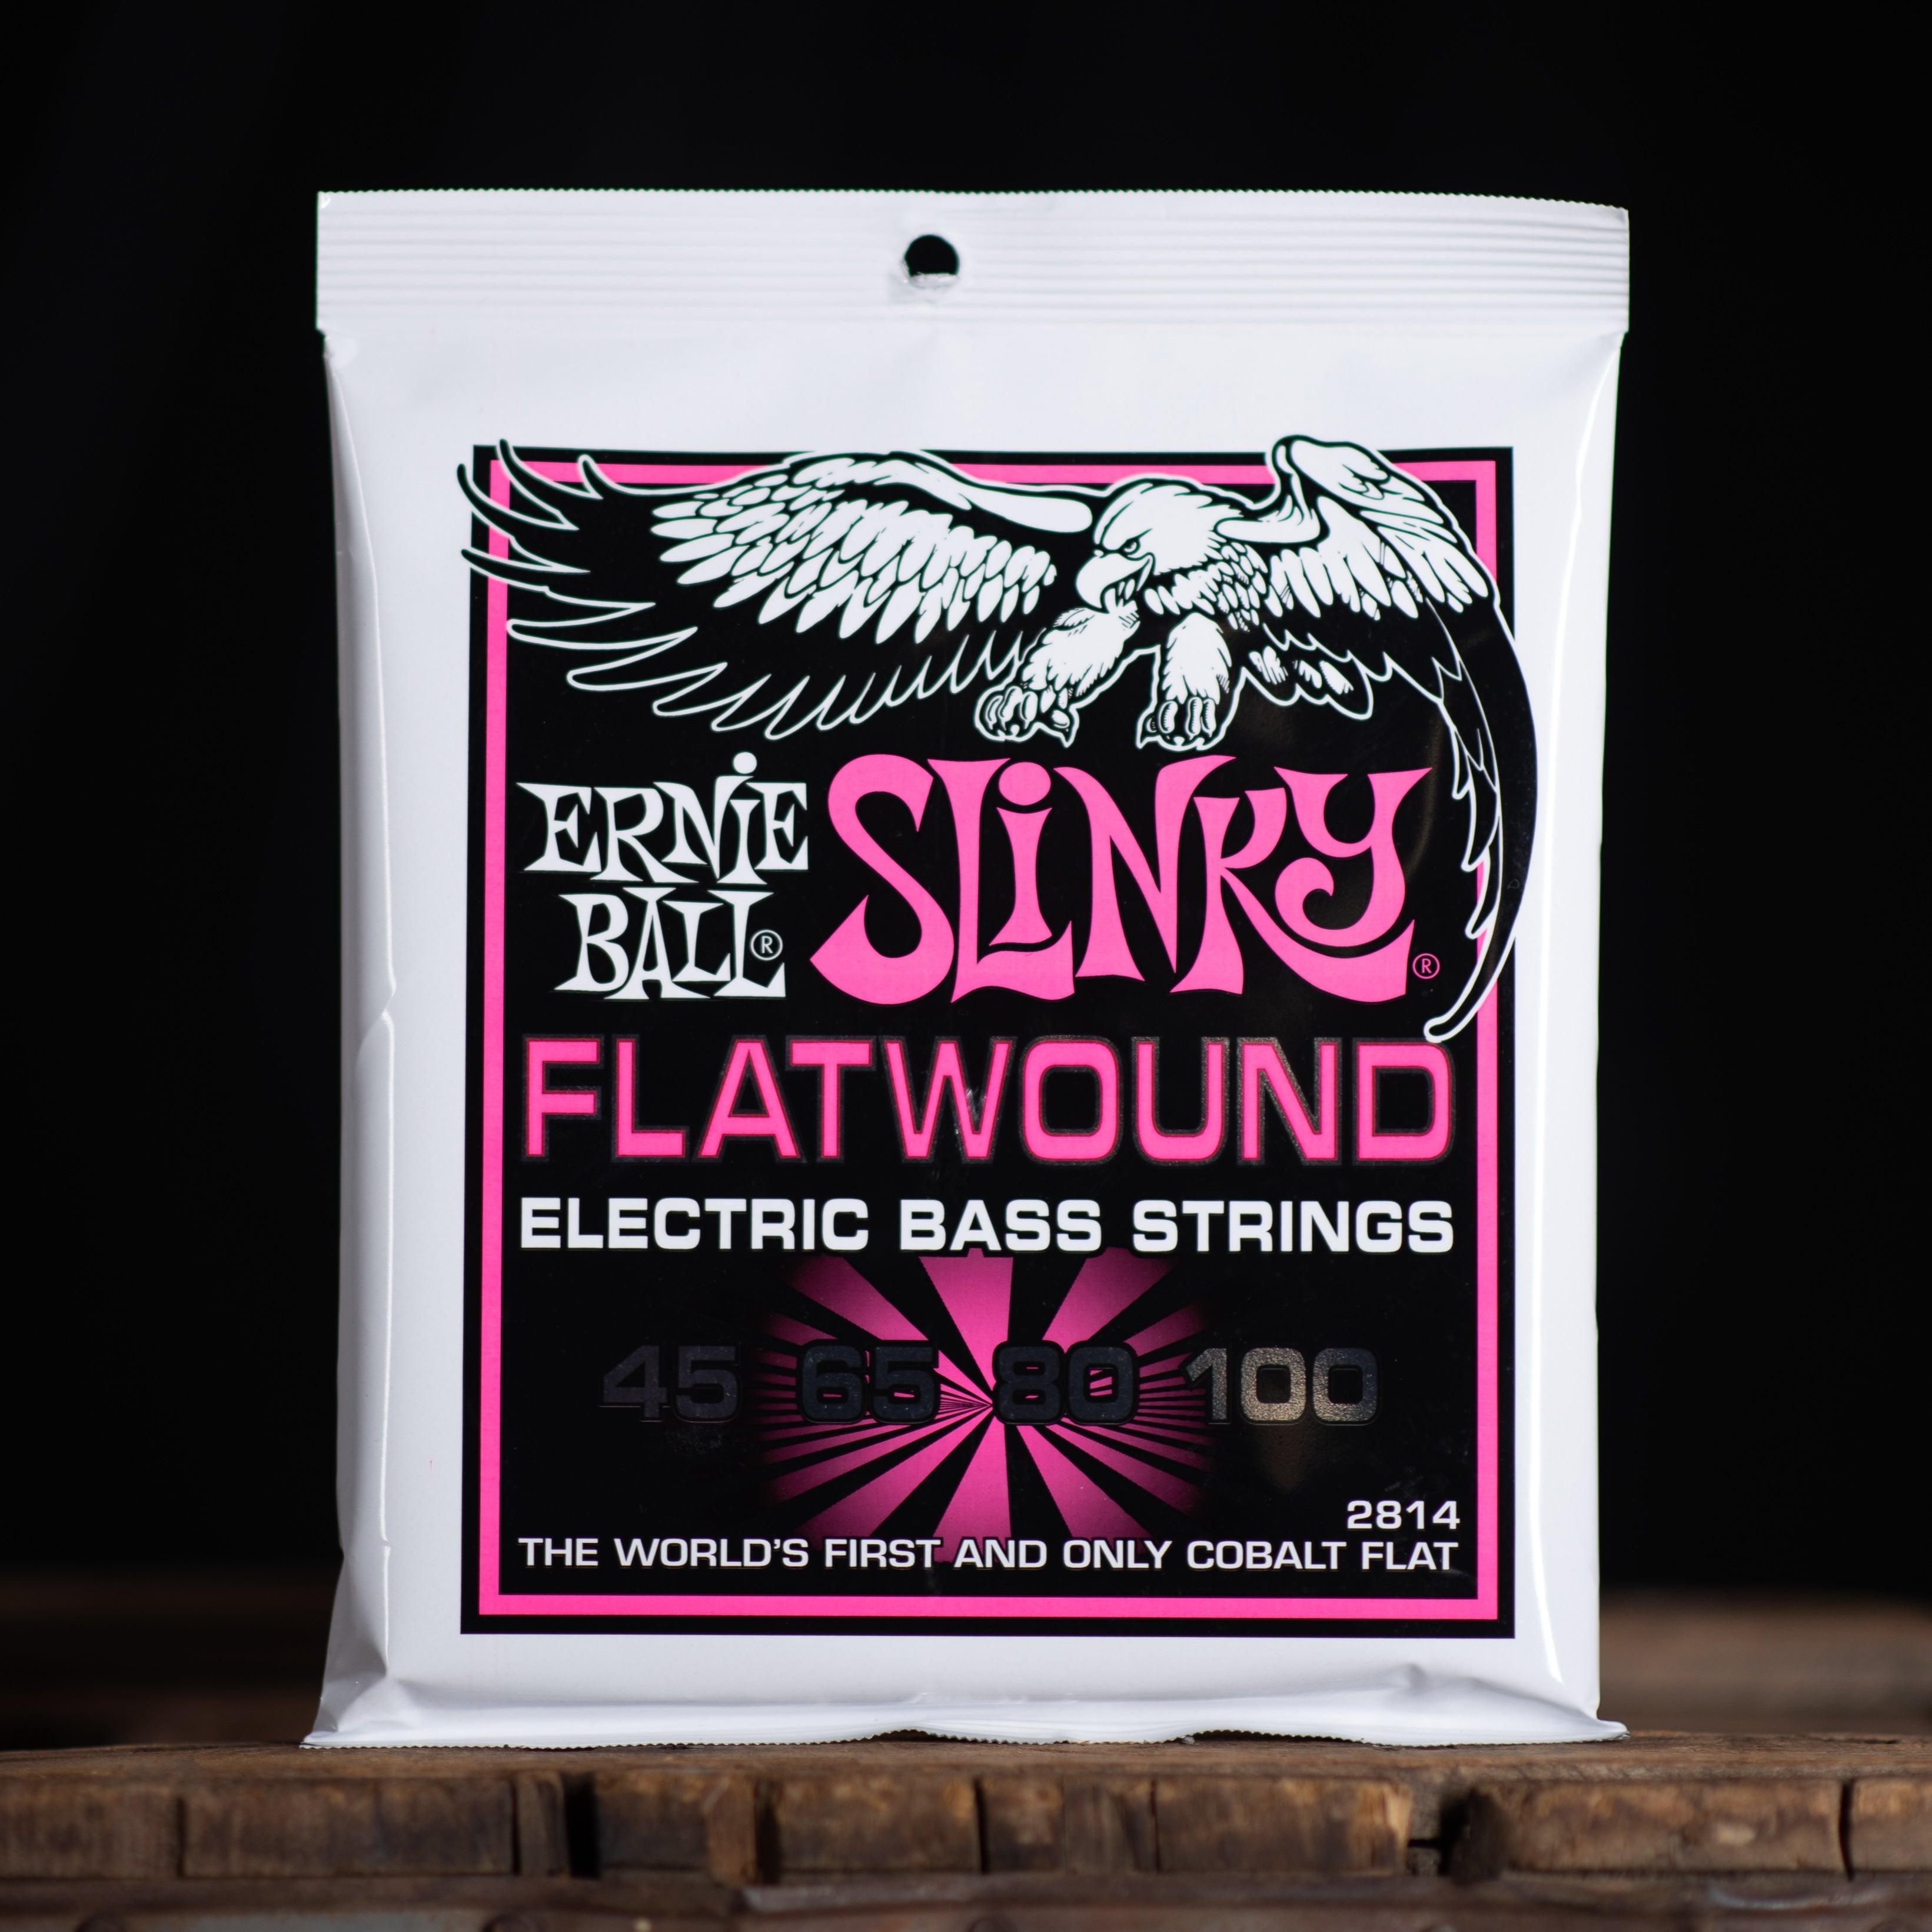 Ernie Ball Super Slinky Flatwound Electric Bass Strings - 45-100 Gauge - Impulse Music Co.